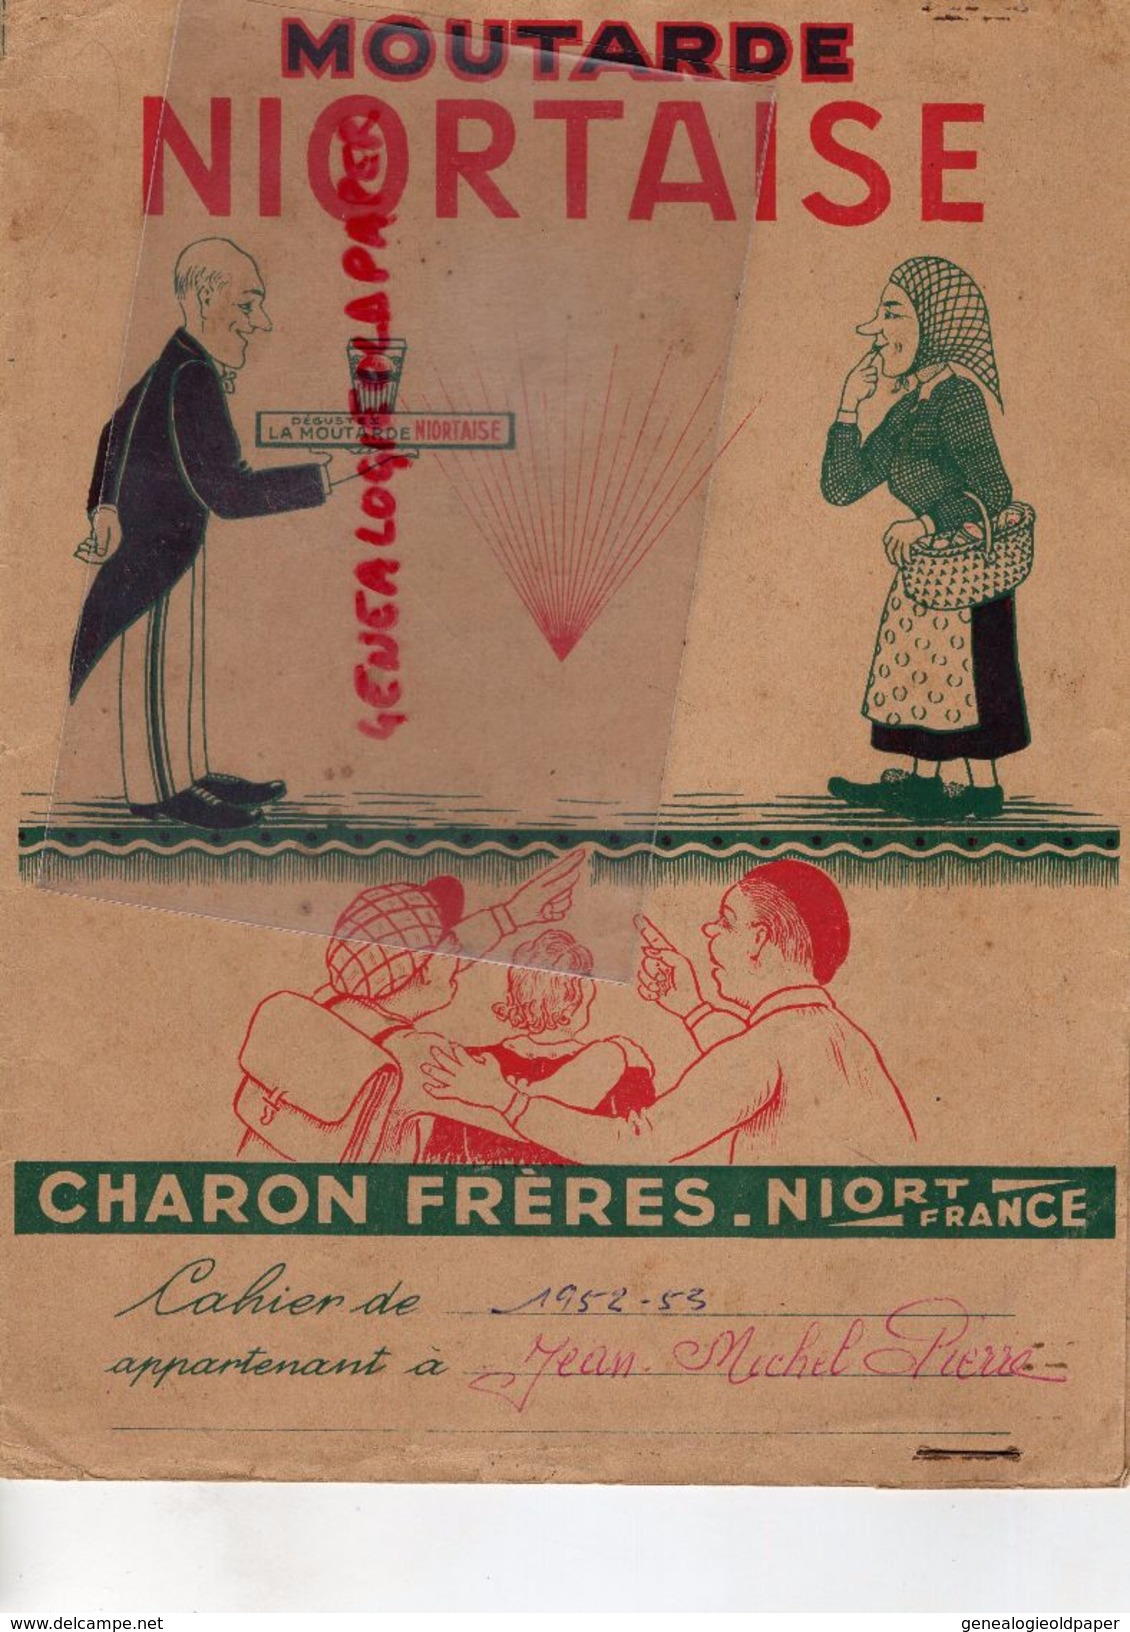 79 - NIORT - RARE PROTEGE CAHIER CHARON FRERES- MOUTARDE NIORTAISE- JEAN MICHEL PIERRE 1952-1953-MARAIS POITEVIN-DONJON - Book Covers